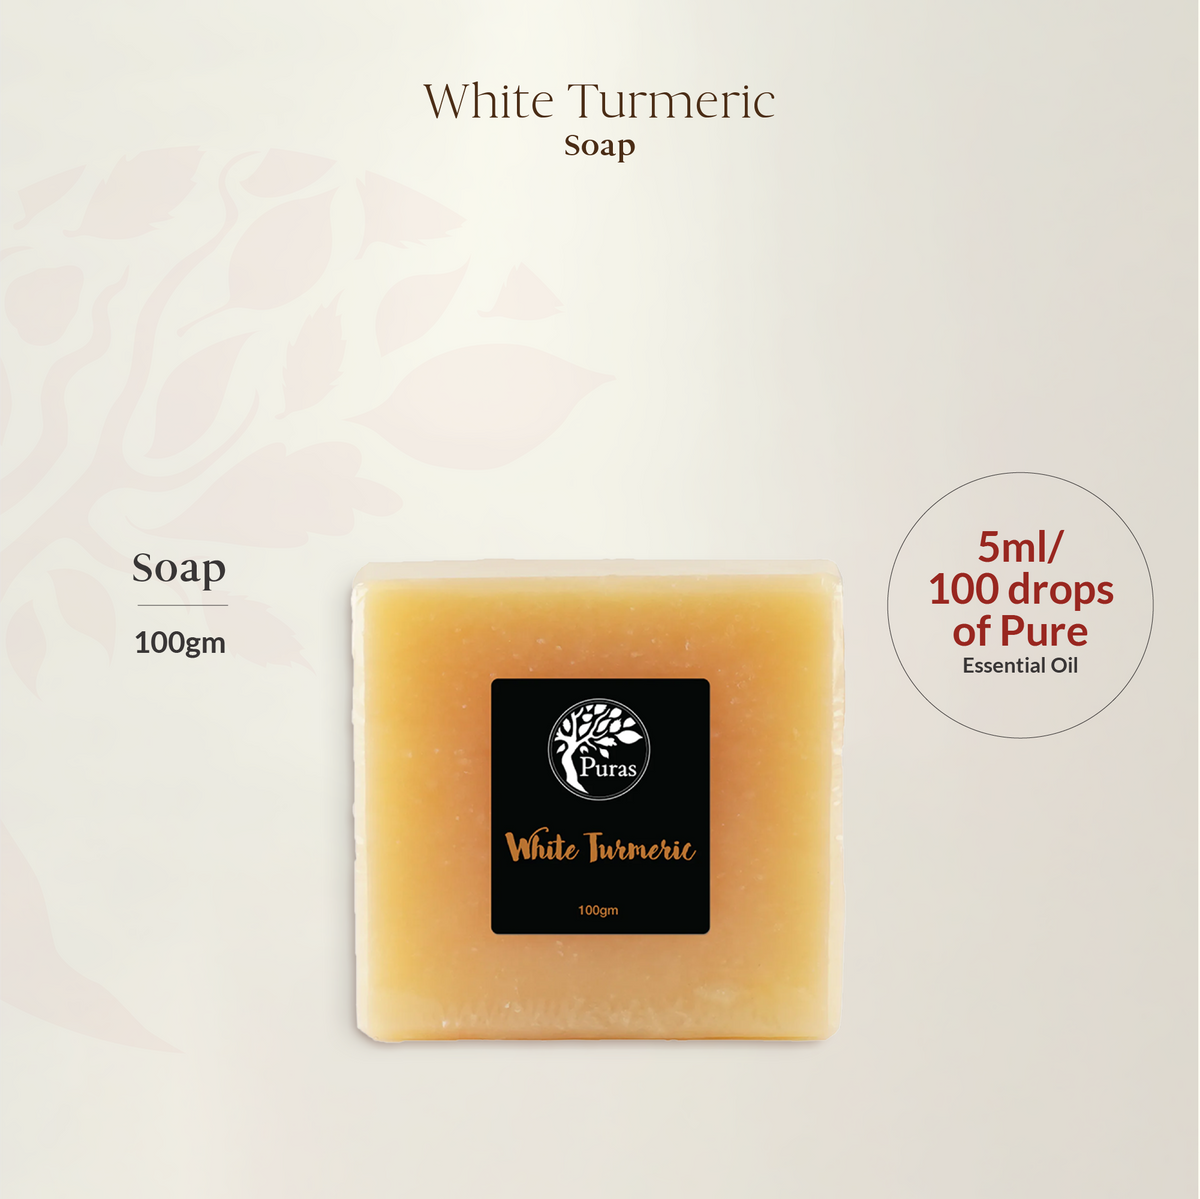 White Turmeric Soap